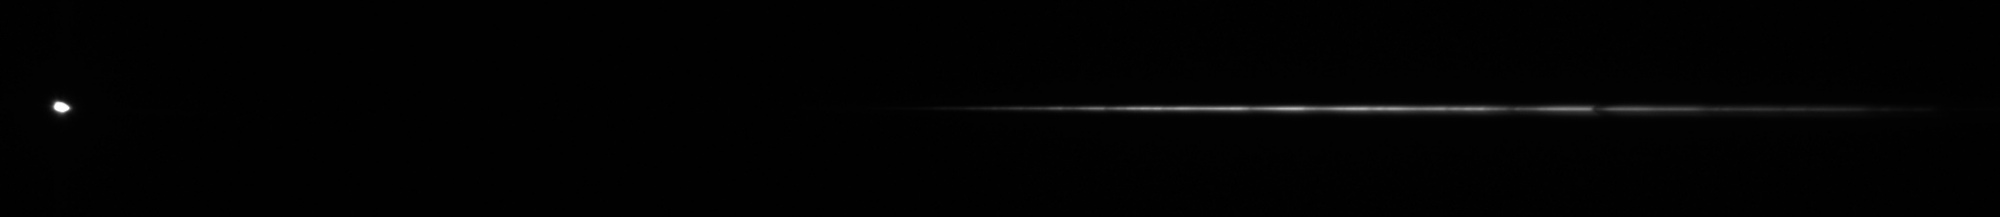 Betelgeuse-1Brut.thumb.jpg.c16db30fe08de286d419fcea2ea77ec4.jpg